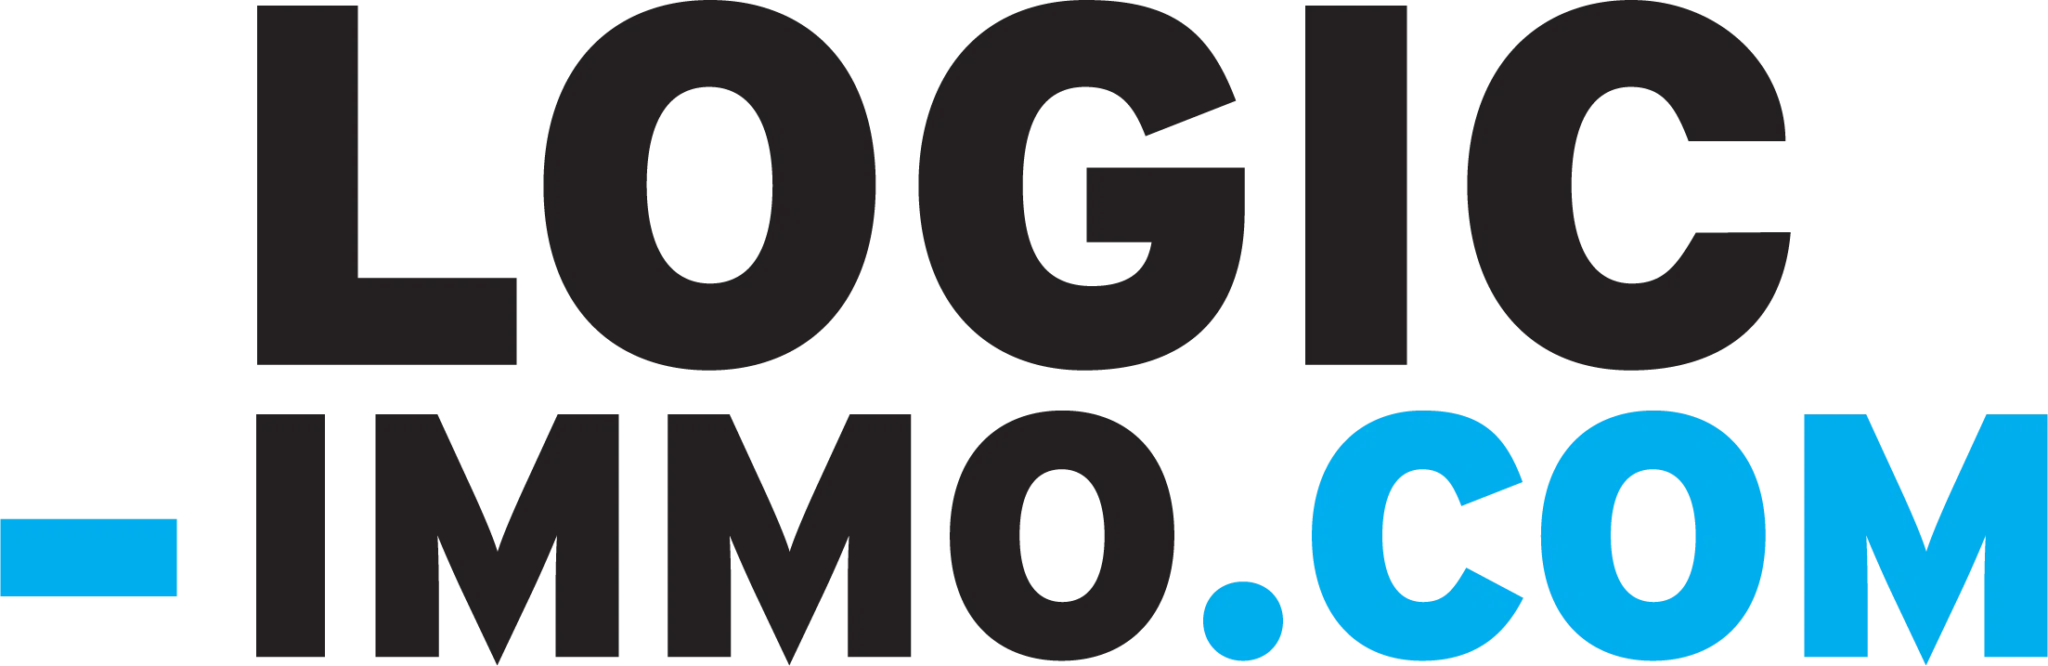 Logo logic immo hd